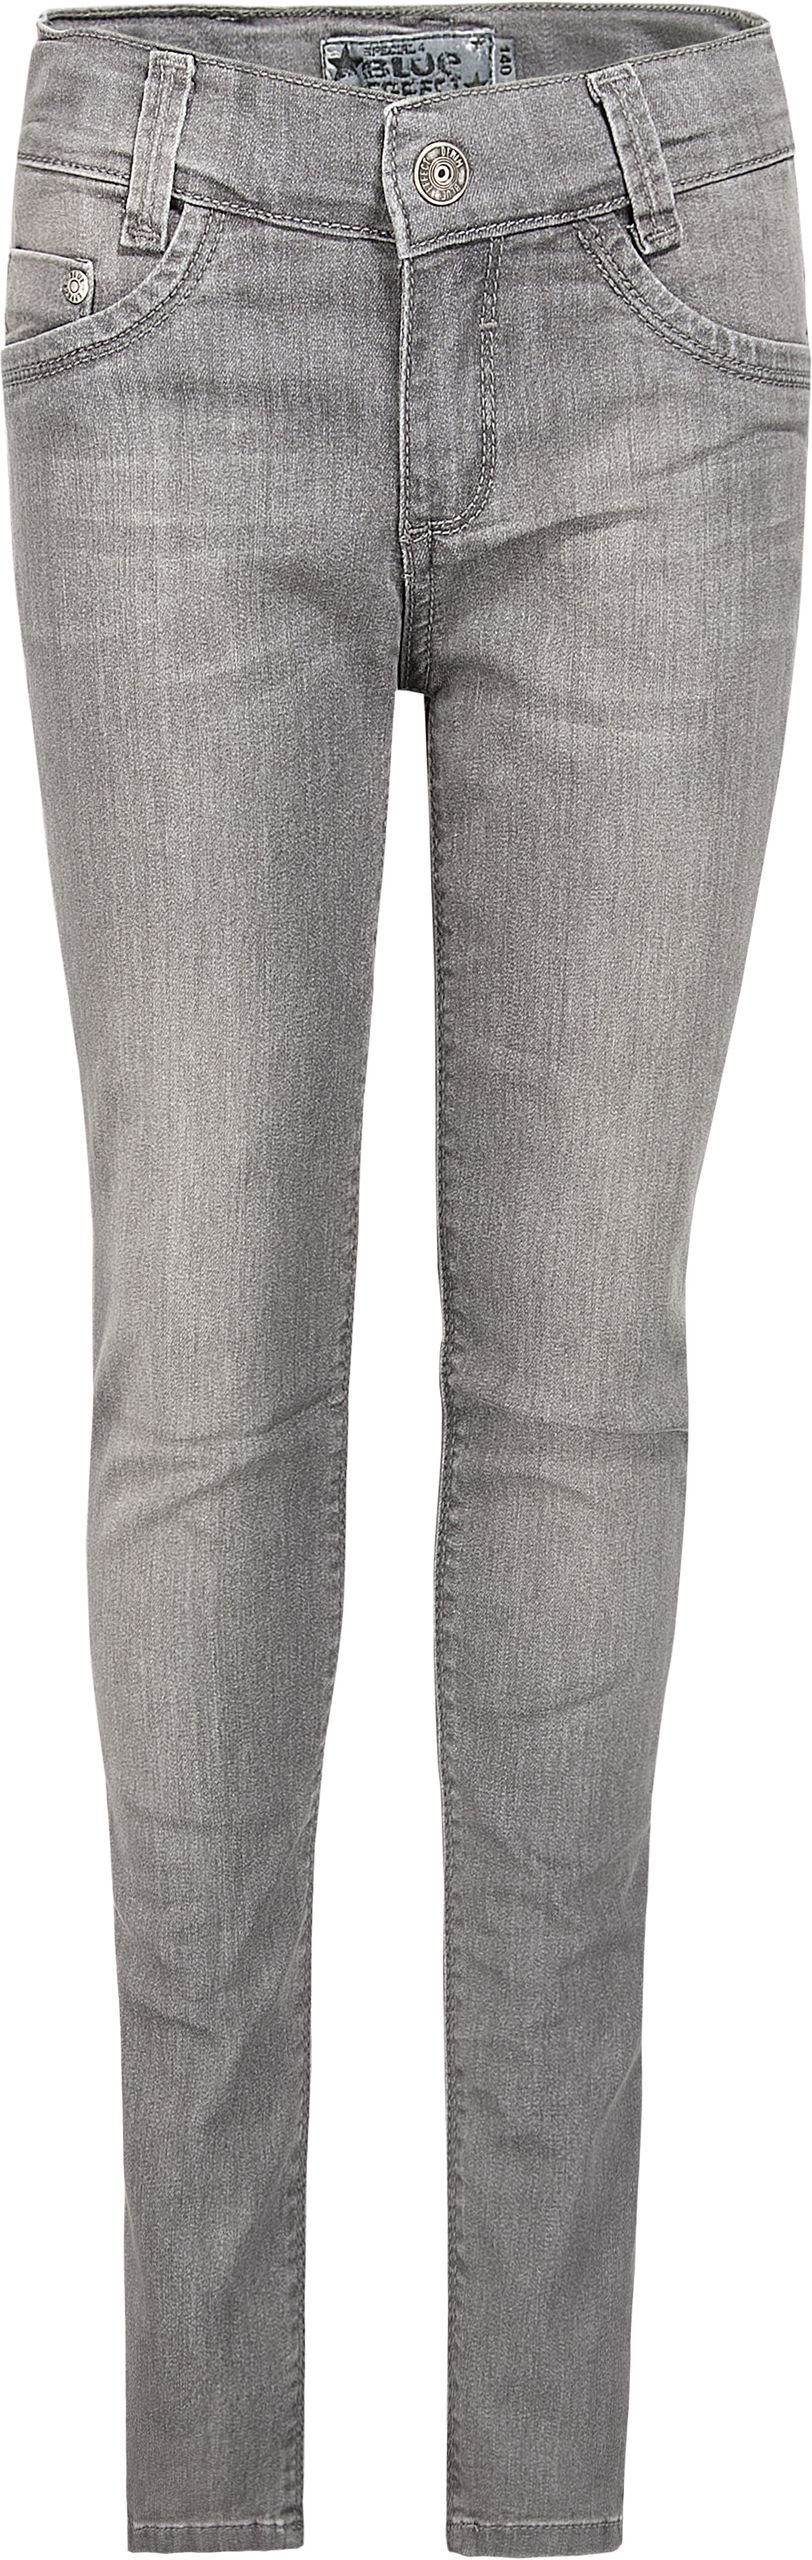 Bundweite BLUE Slim-fit-Jeans Jeggings extra slim denim EFFECT grey schmal